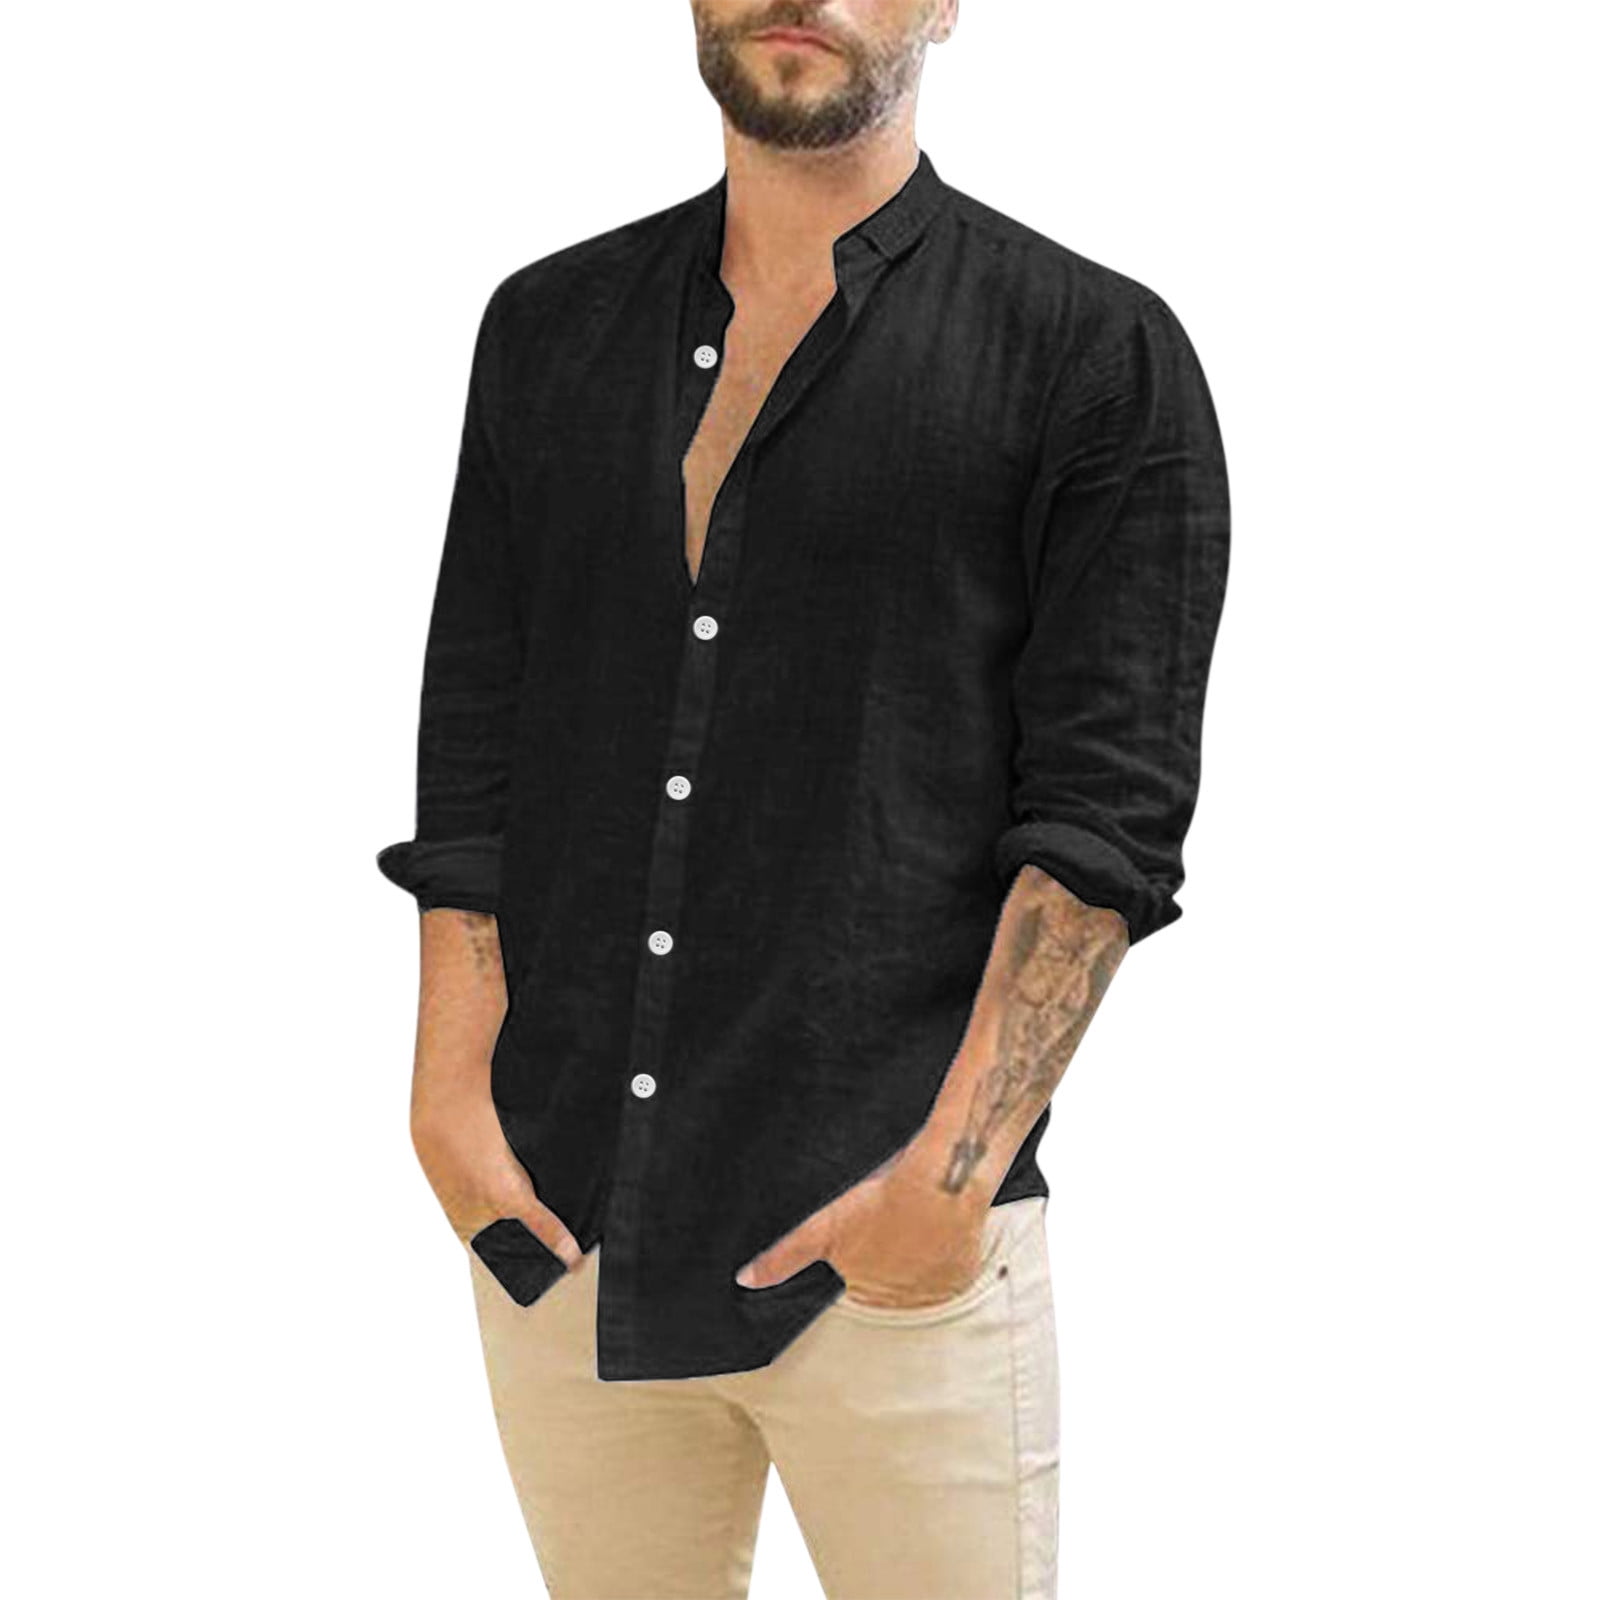 Yubnlvae mens shirts Male Hawaii Shirts Cotton Linen Button Down Tropical  Holiday Beach Shirts Shirts For Men Black 